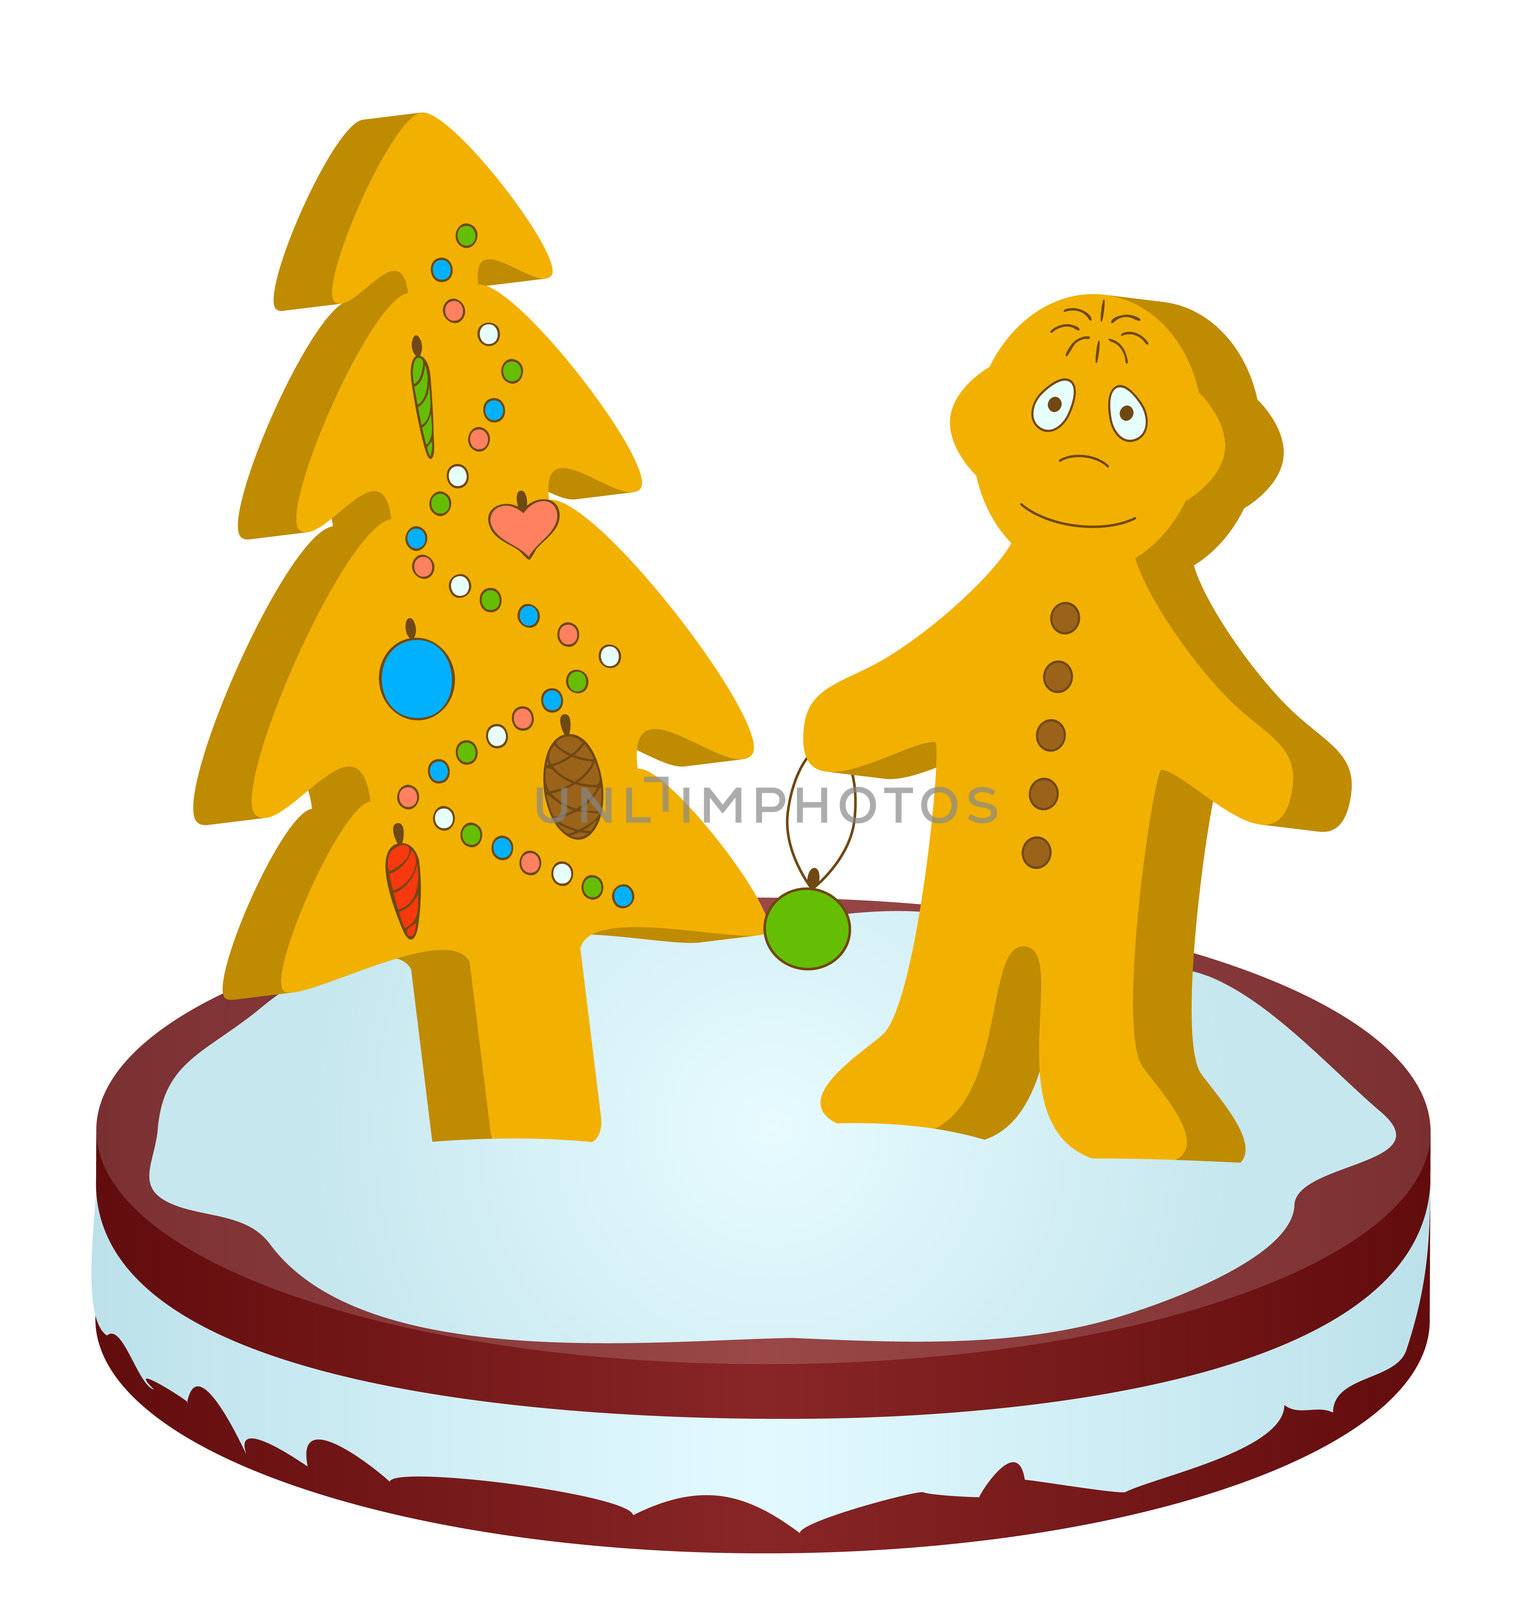 Gingerbread little man under a gingerbread Christmas tree